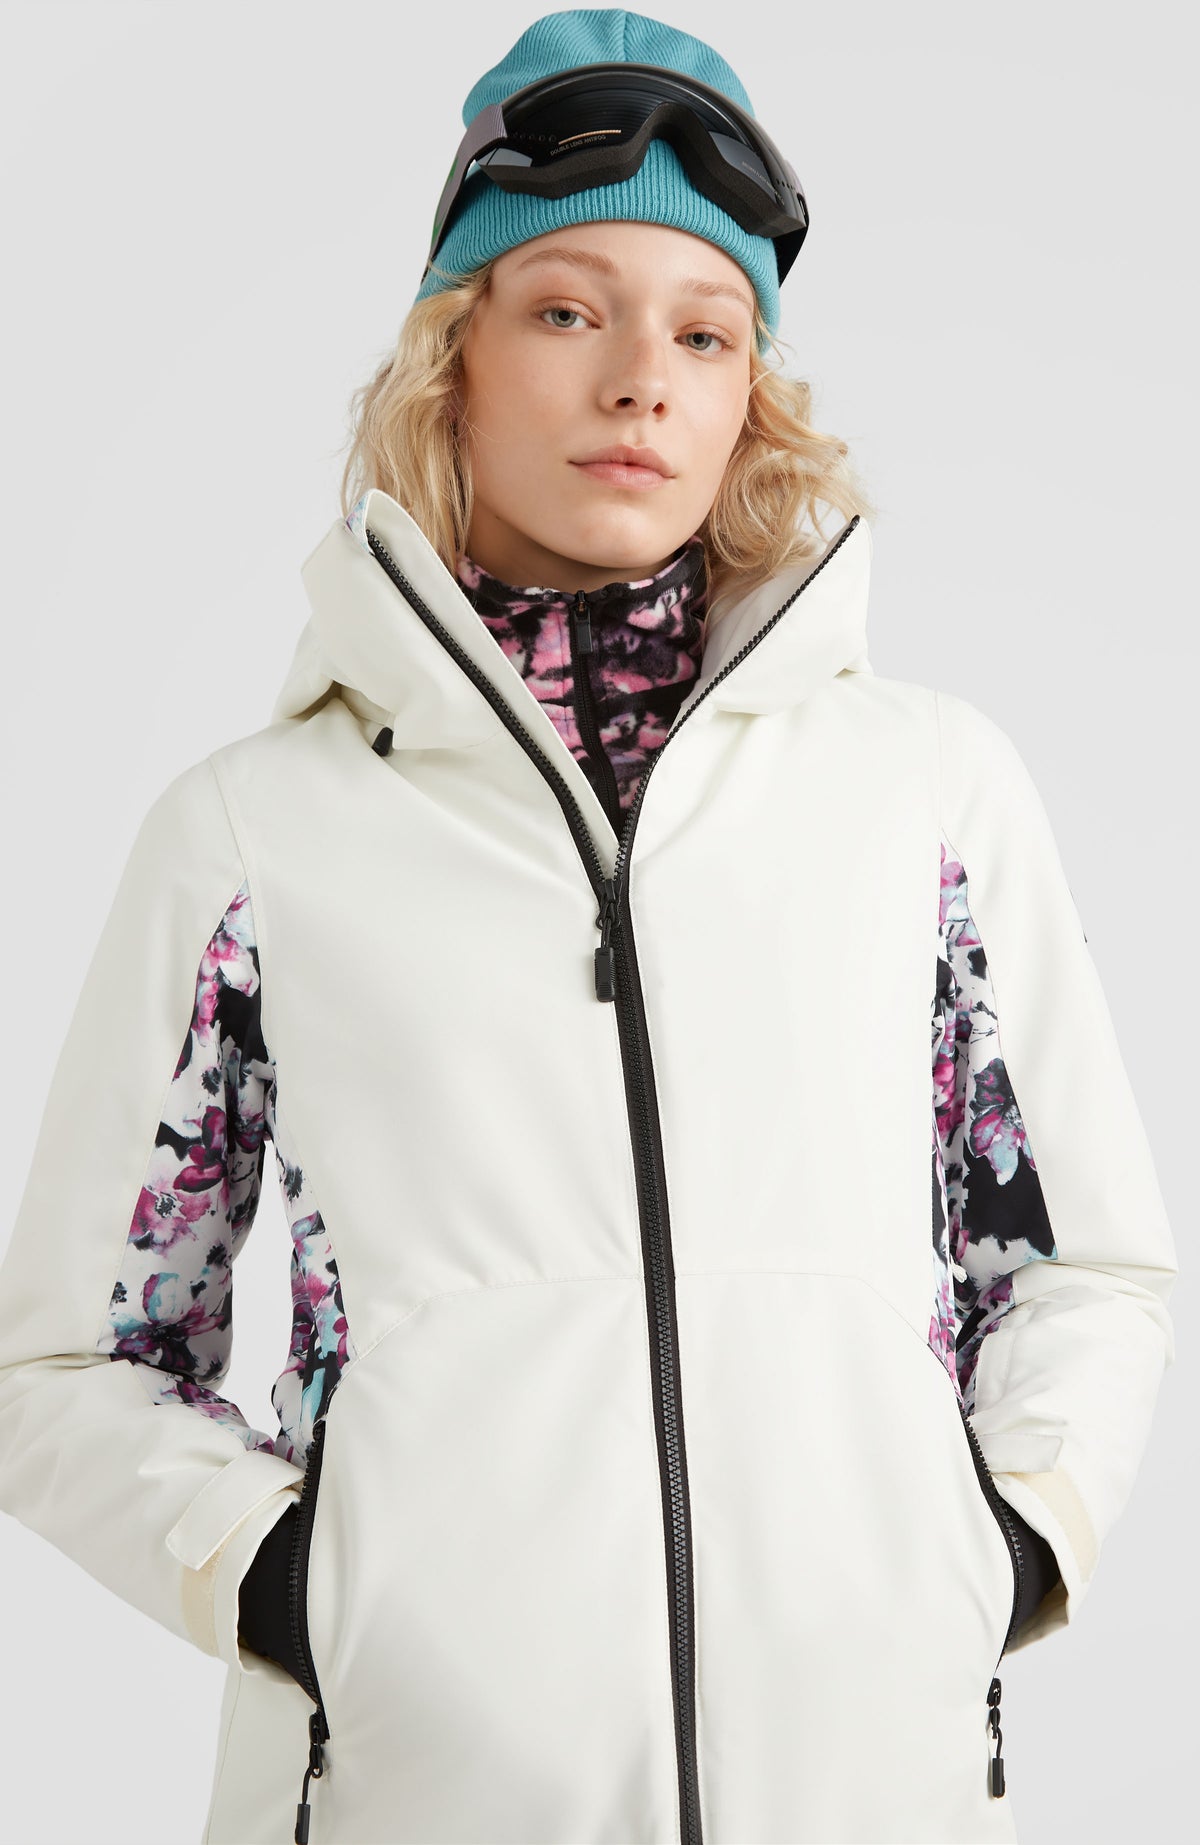 O'NEILL Aplite Jacket Chaqueta Nieve, Mujer, Snow White Colour